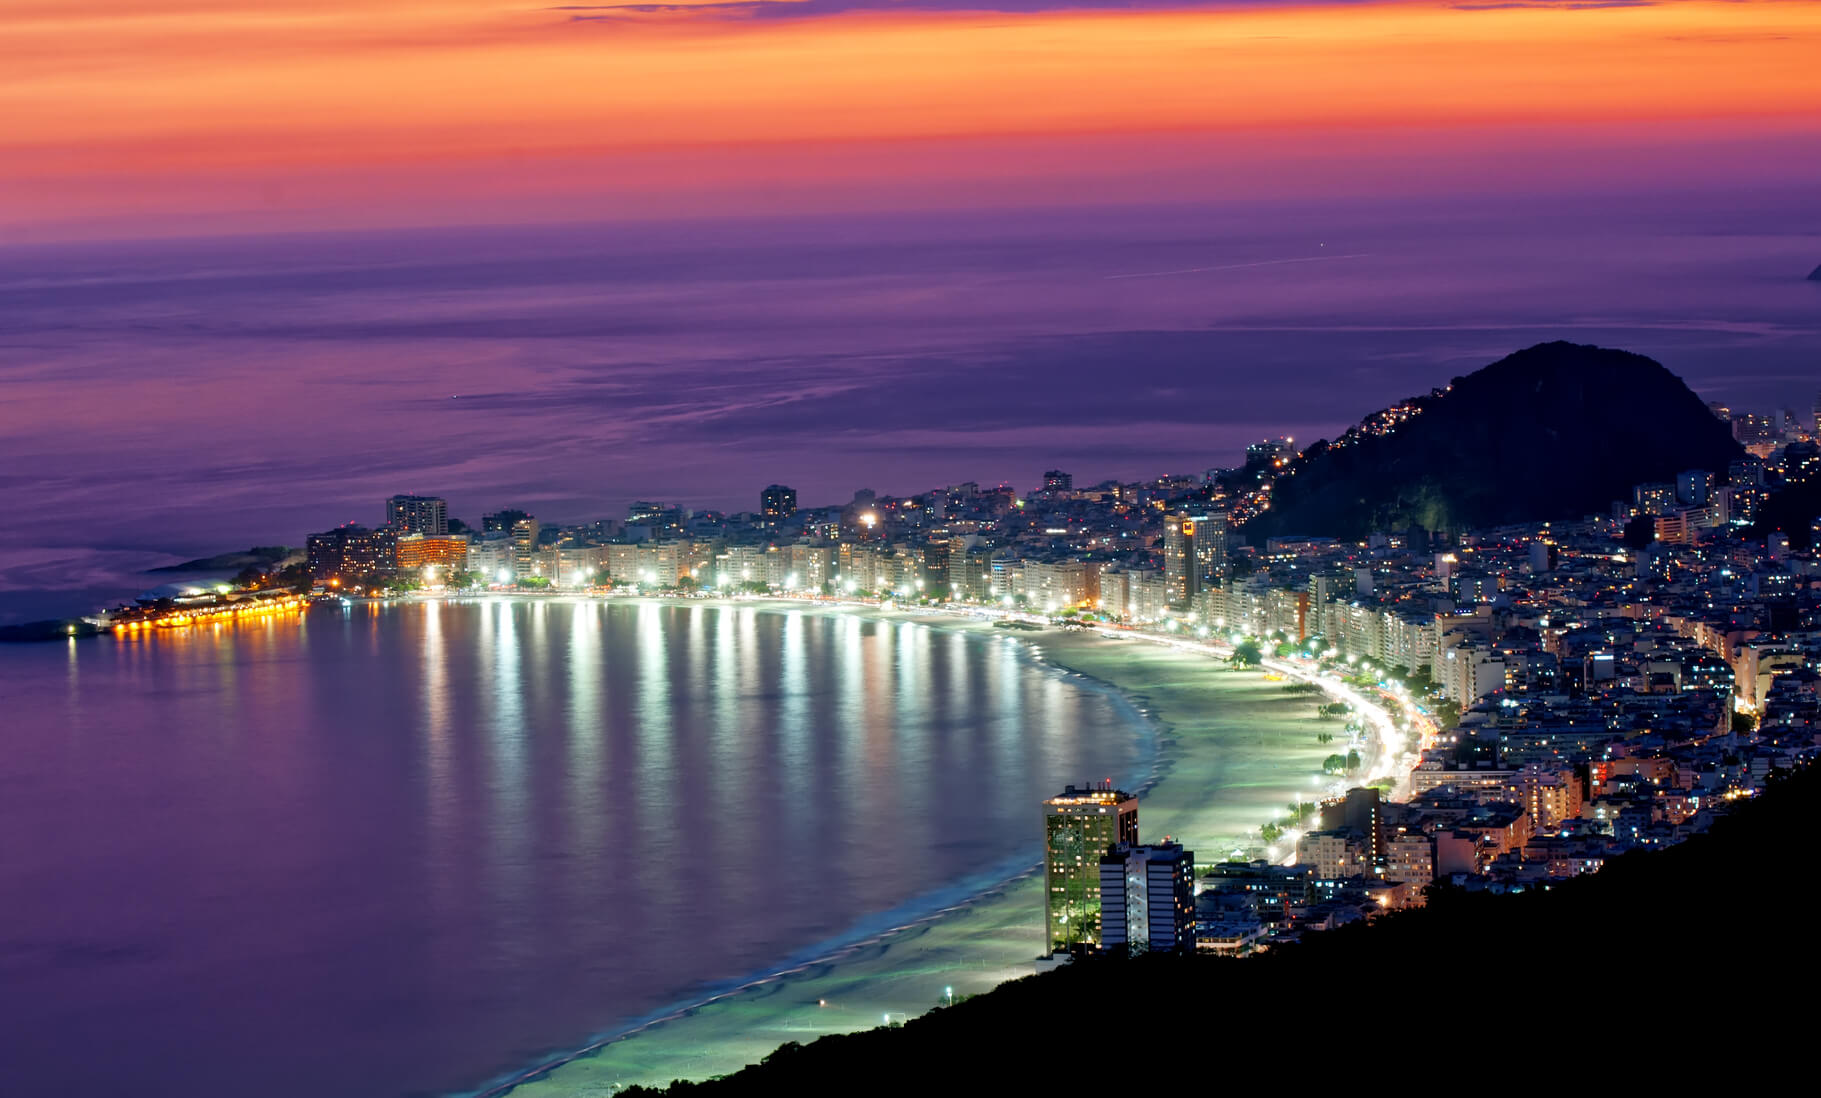 Flight deals from Milan, Italy to Rio De Janeiro, Brazil | Secret Flying